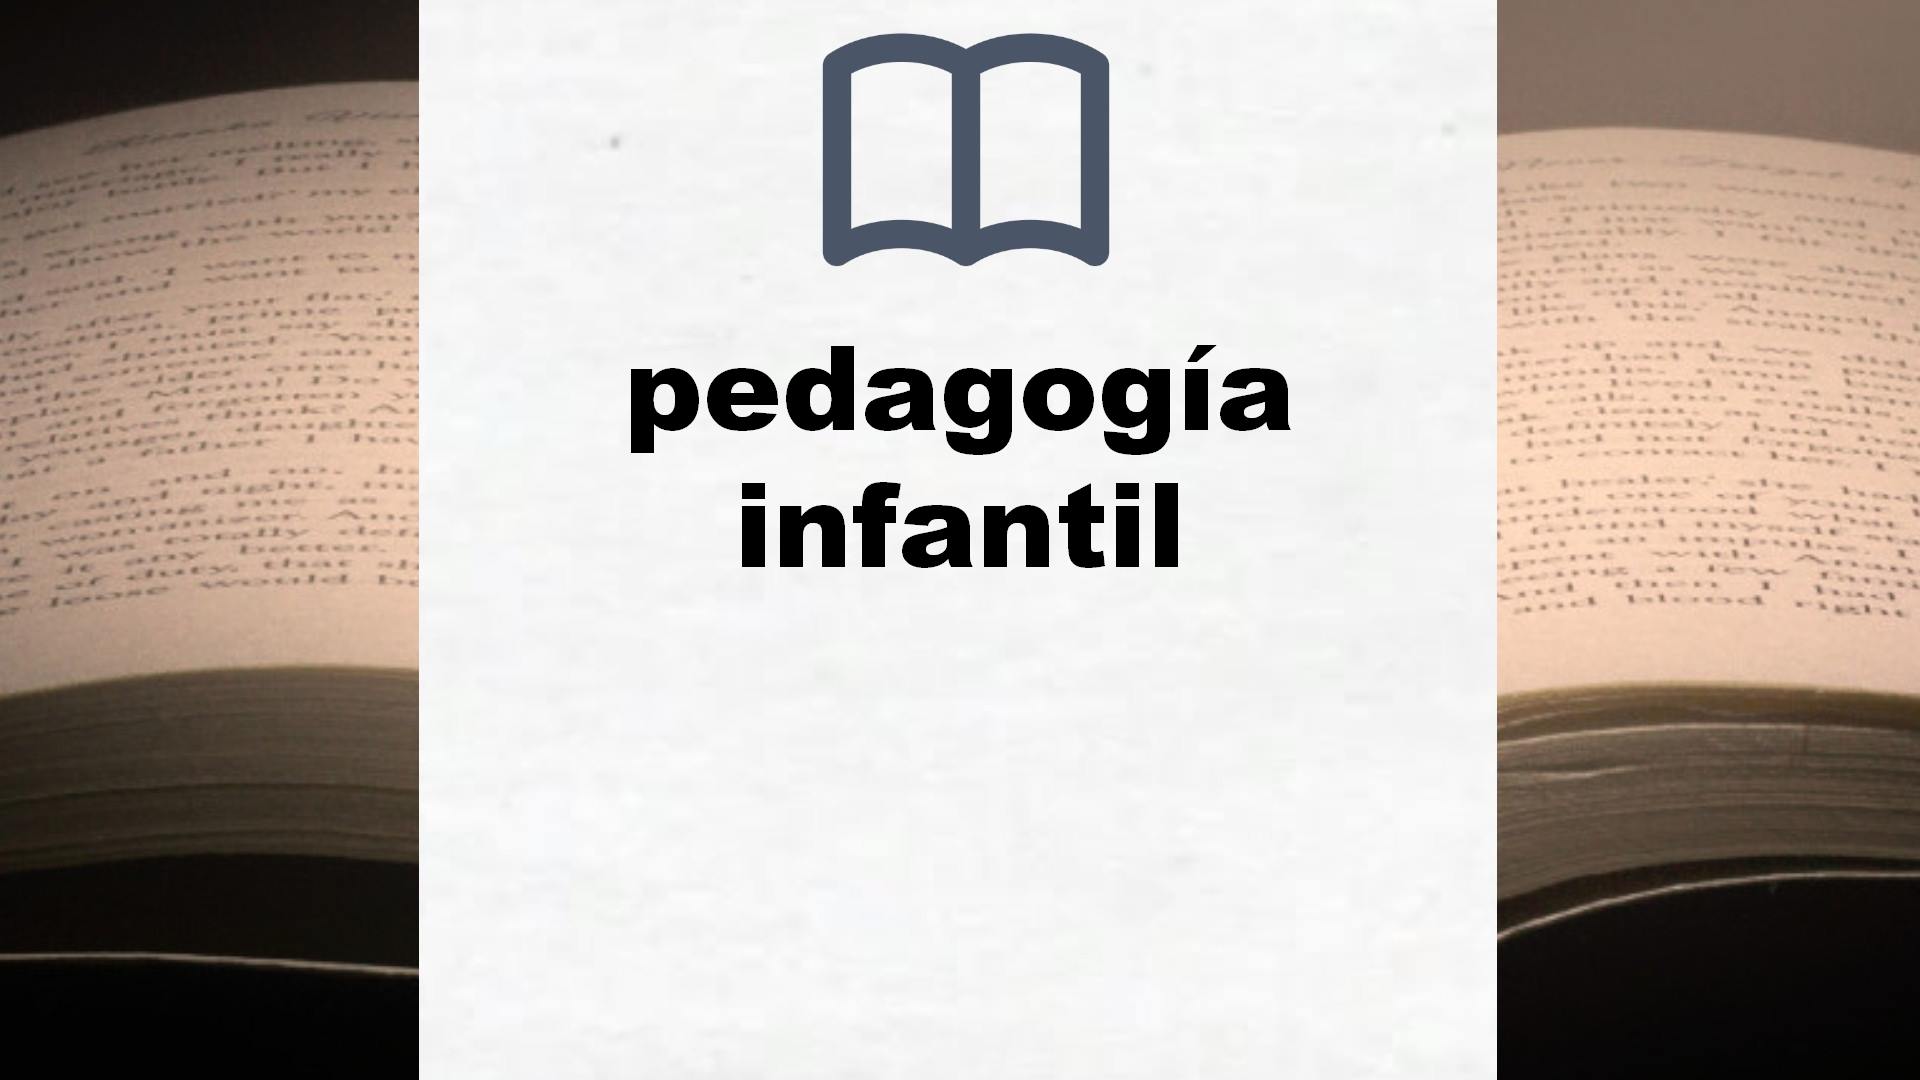 Libros sobre pedagogía infantil